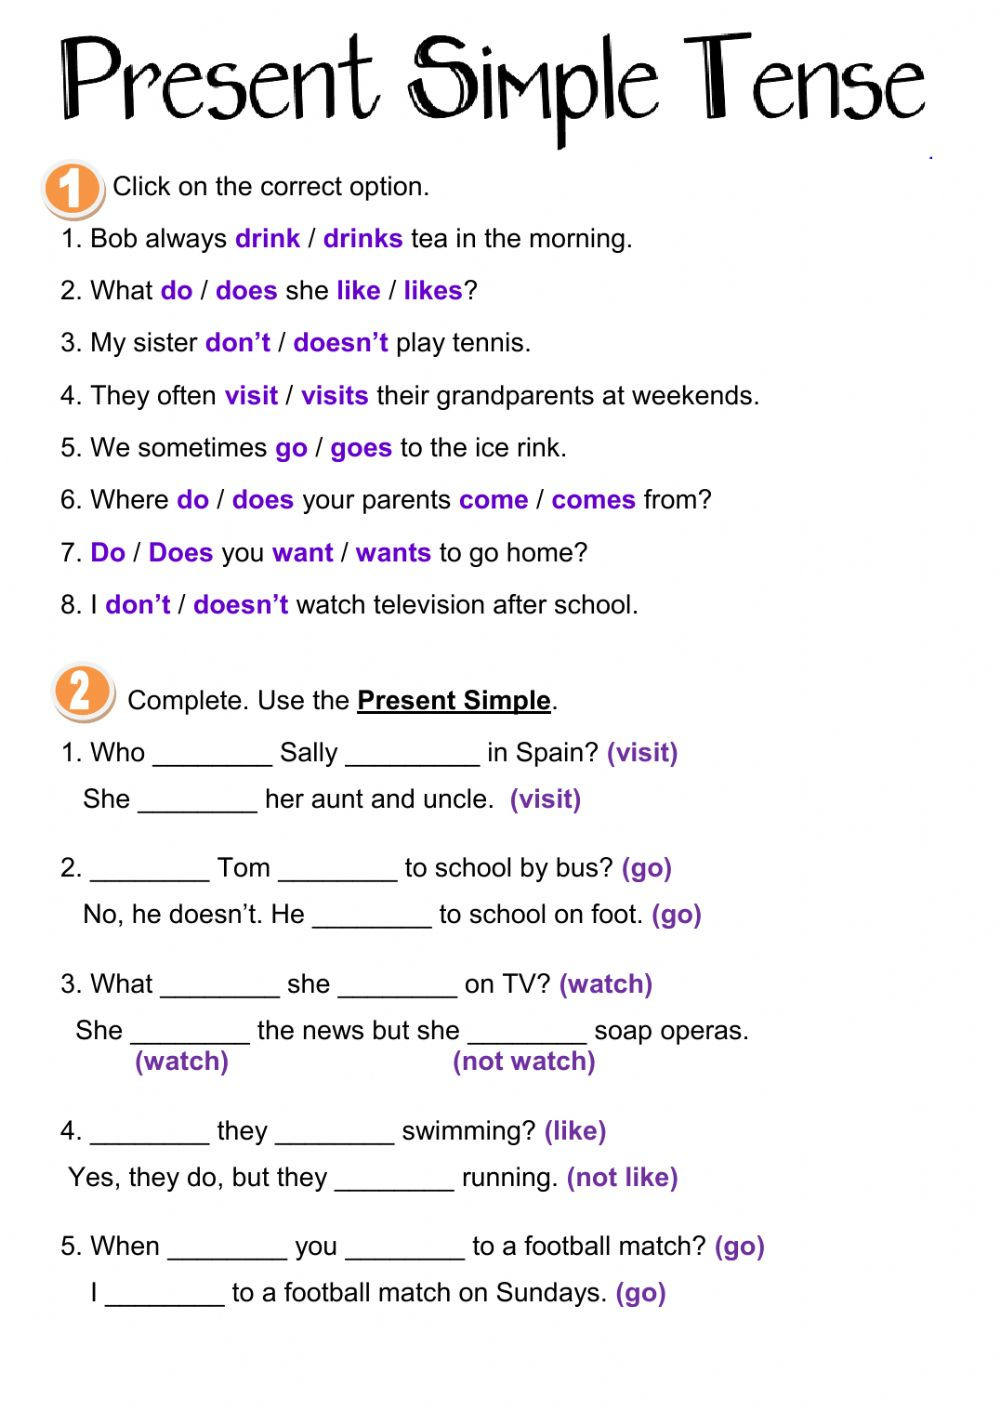 Present Simple Tense Interactive Worksheet — Db